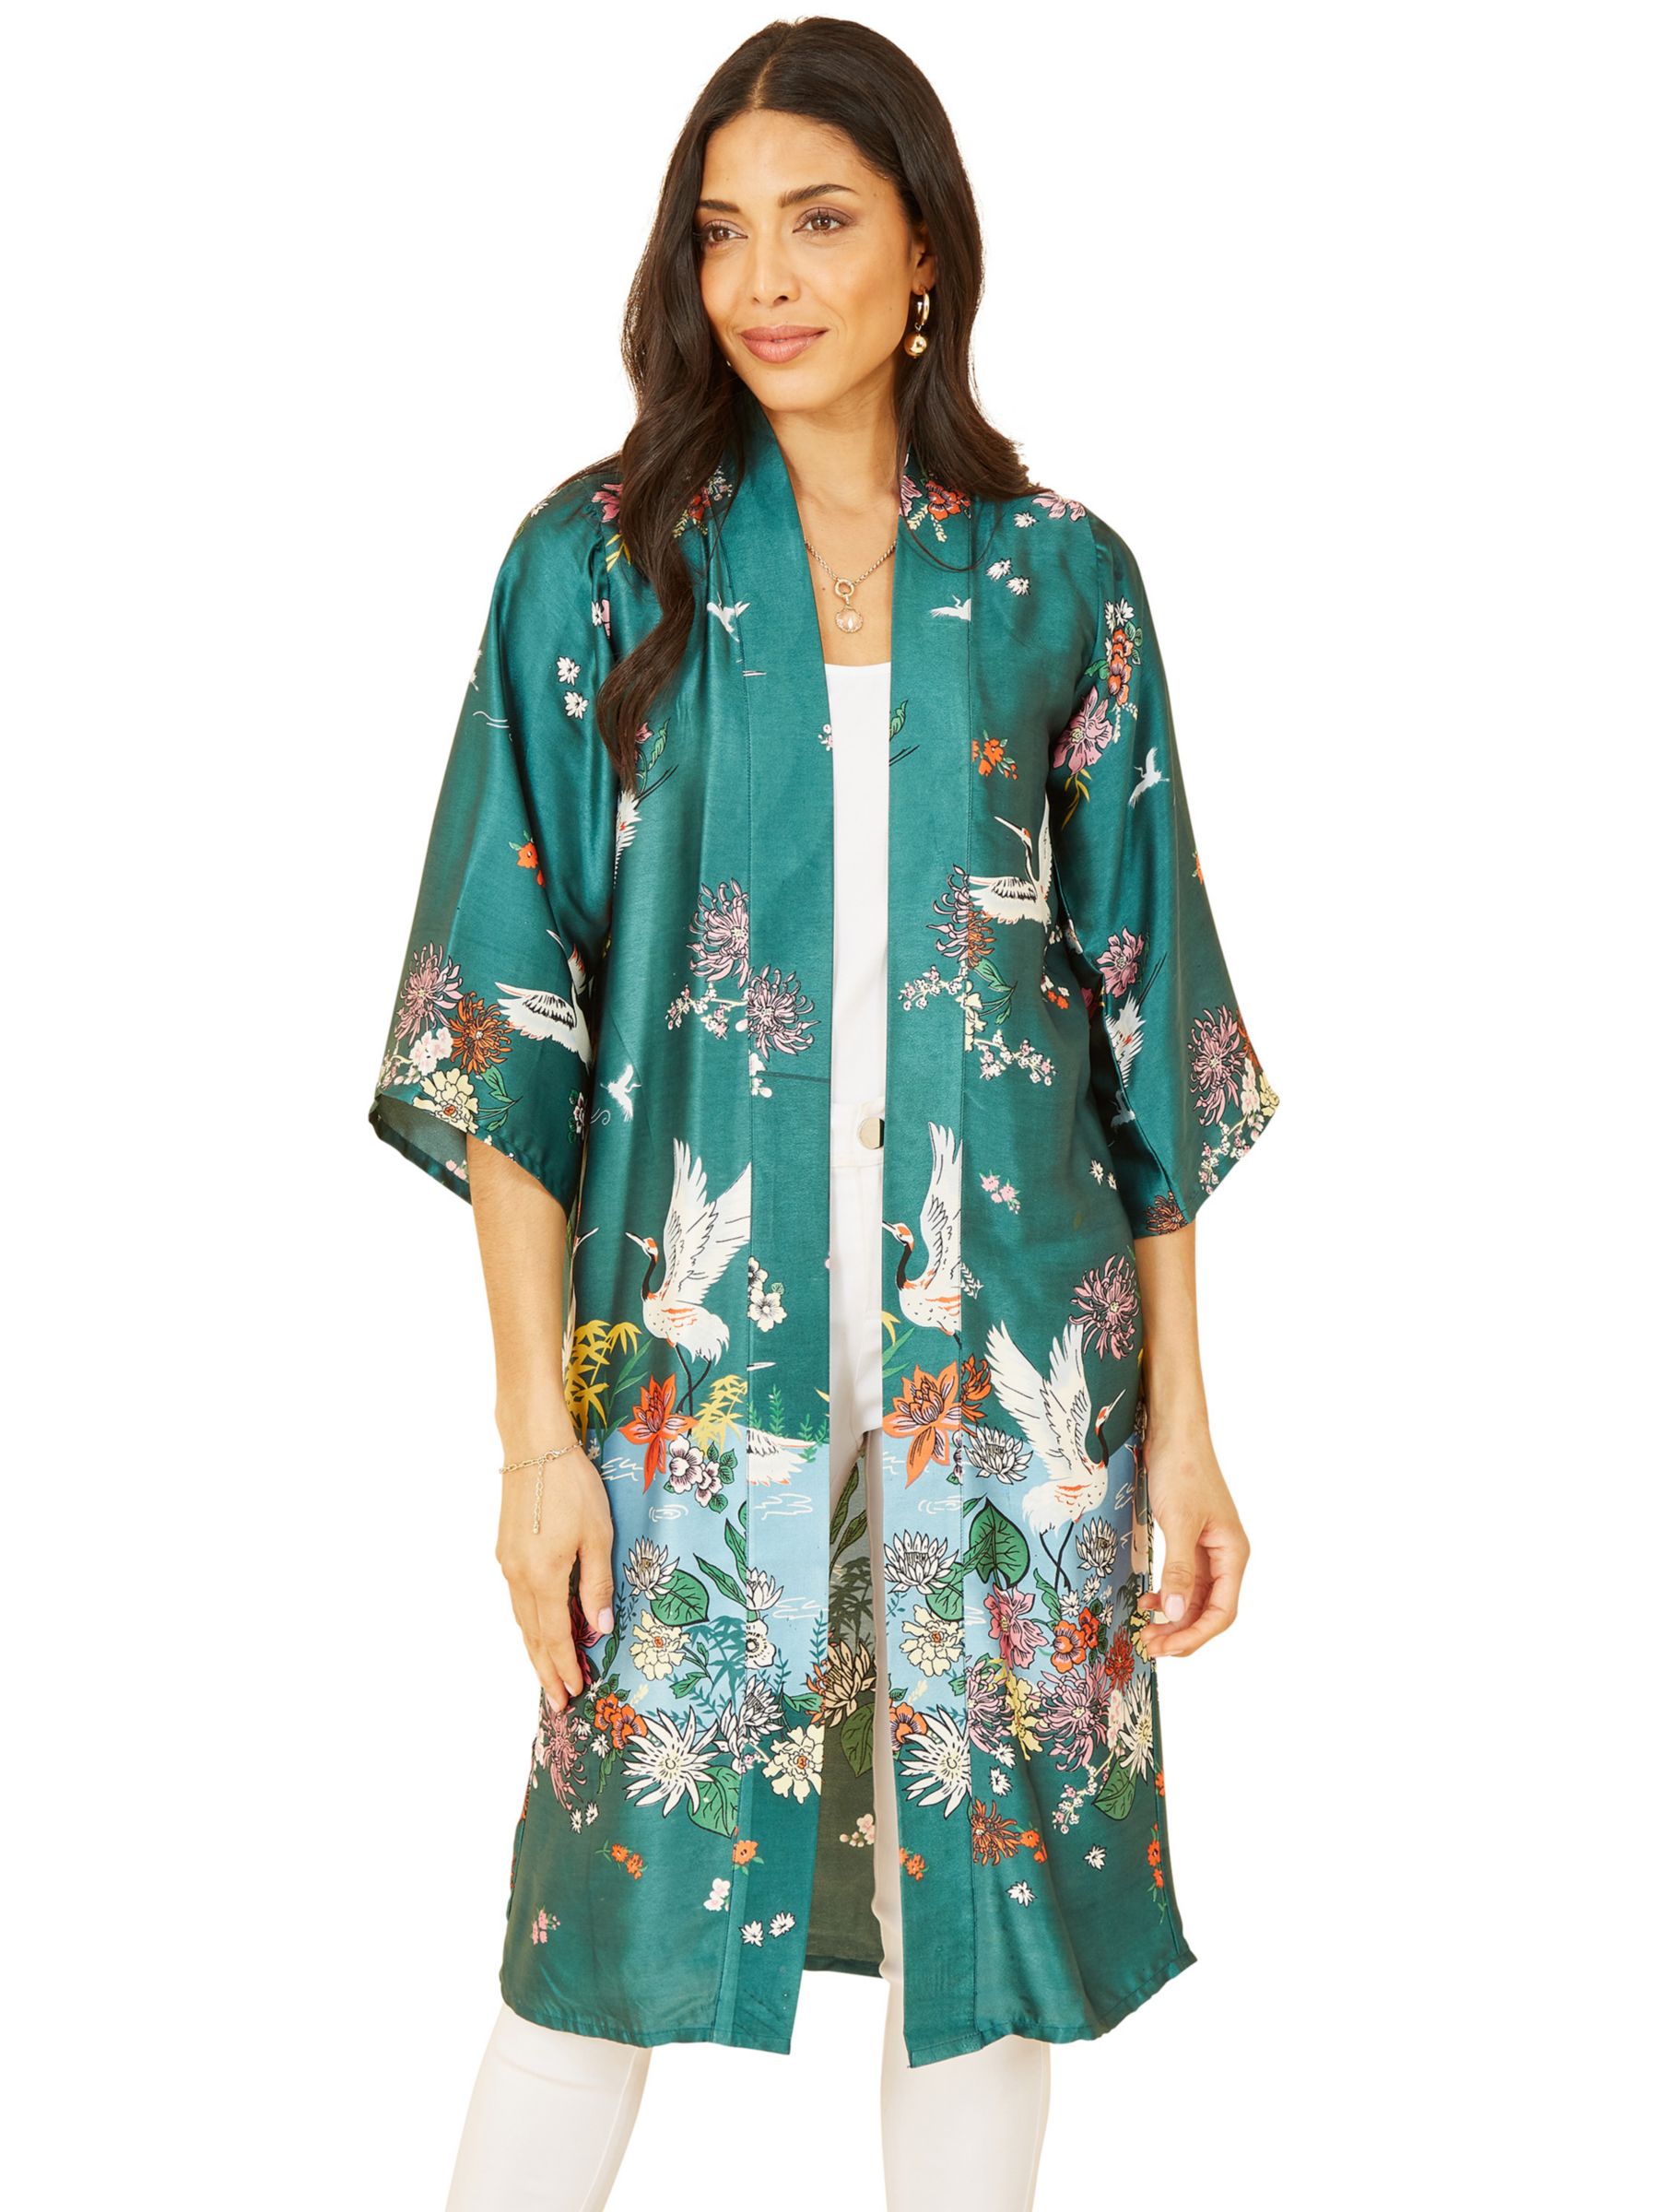 Bluebella Marcella Full-Length Chiffon Kimono, Black